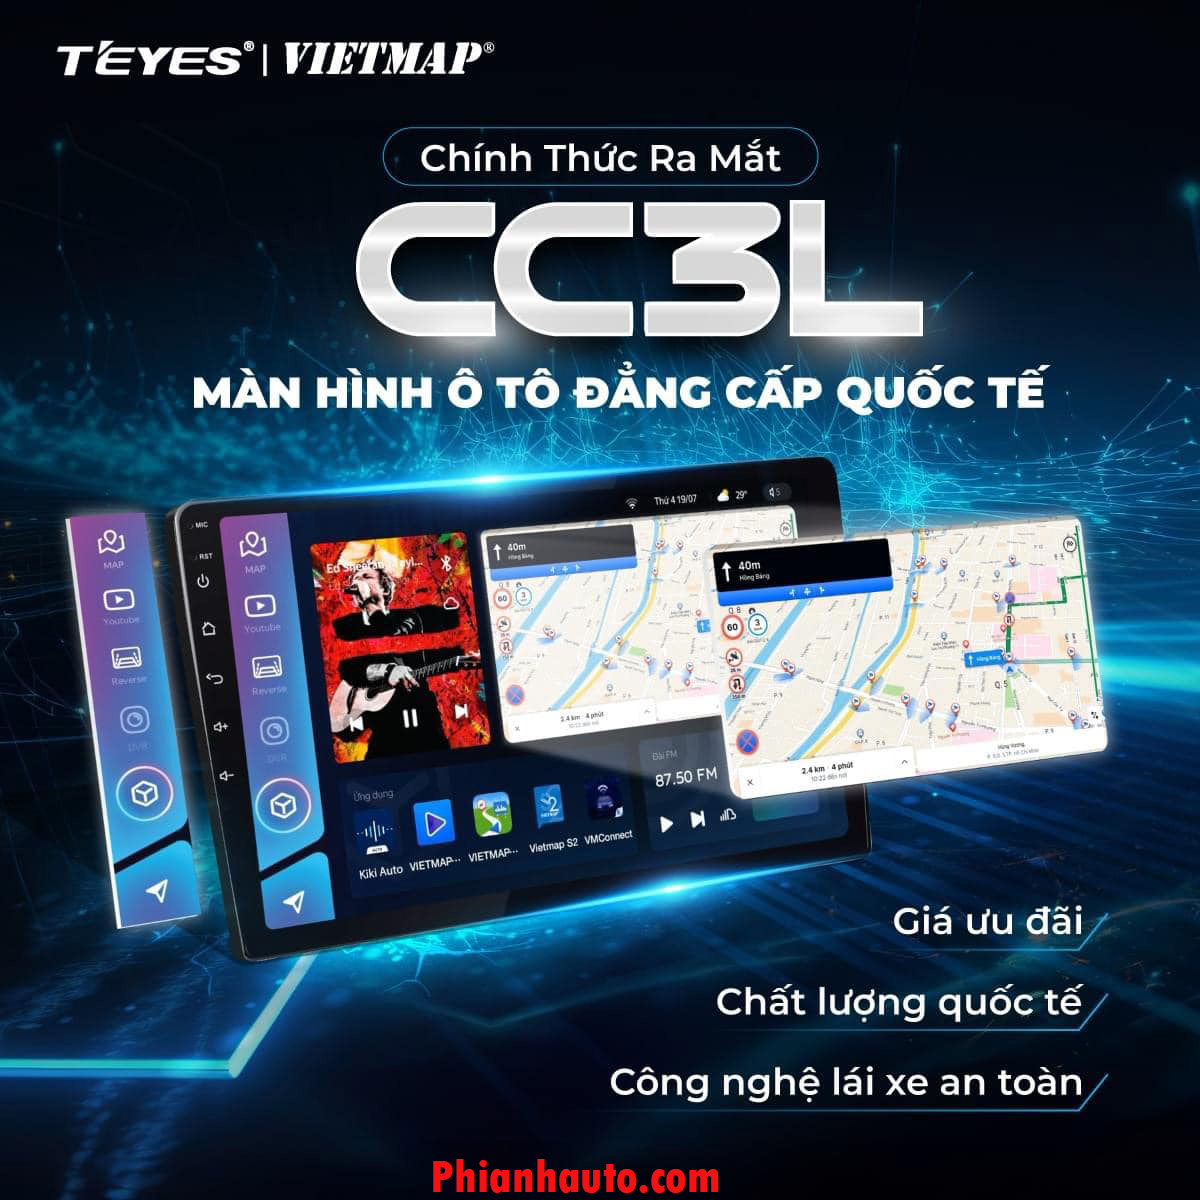 Man Hinh Android Cc3l